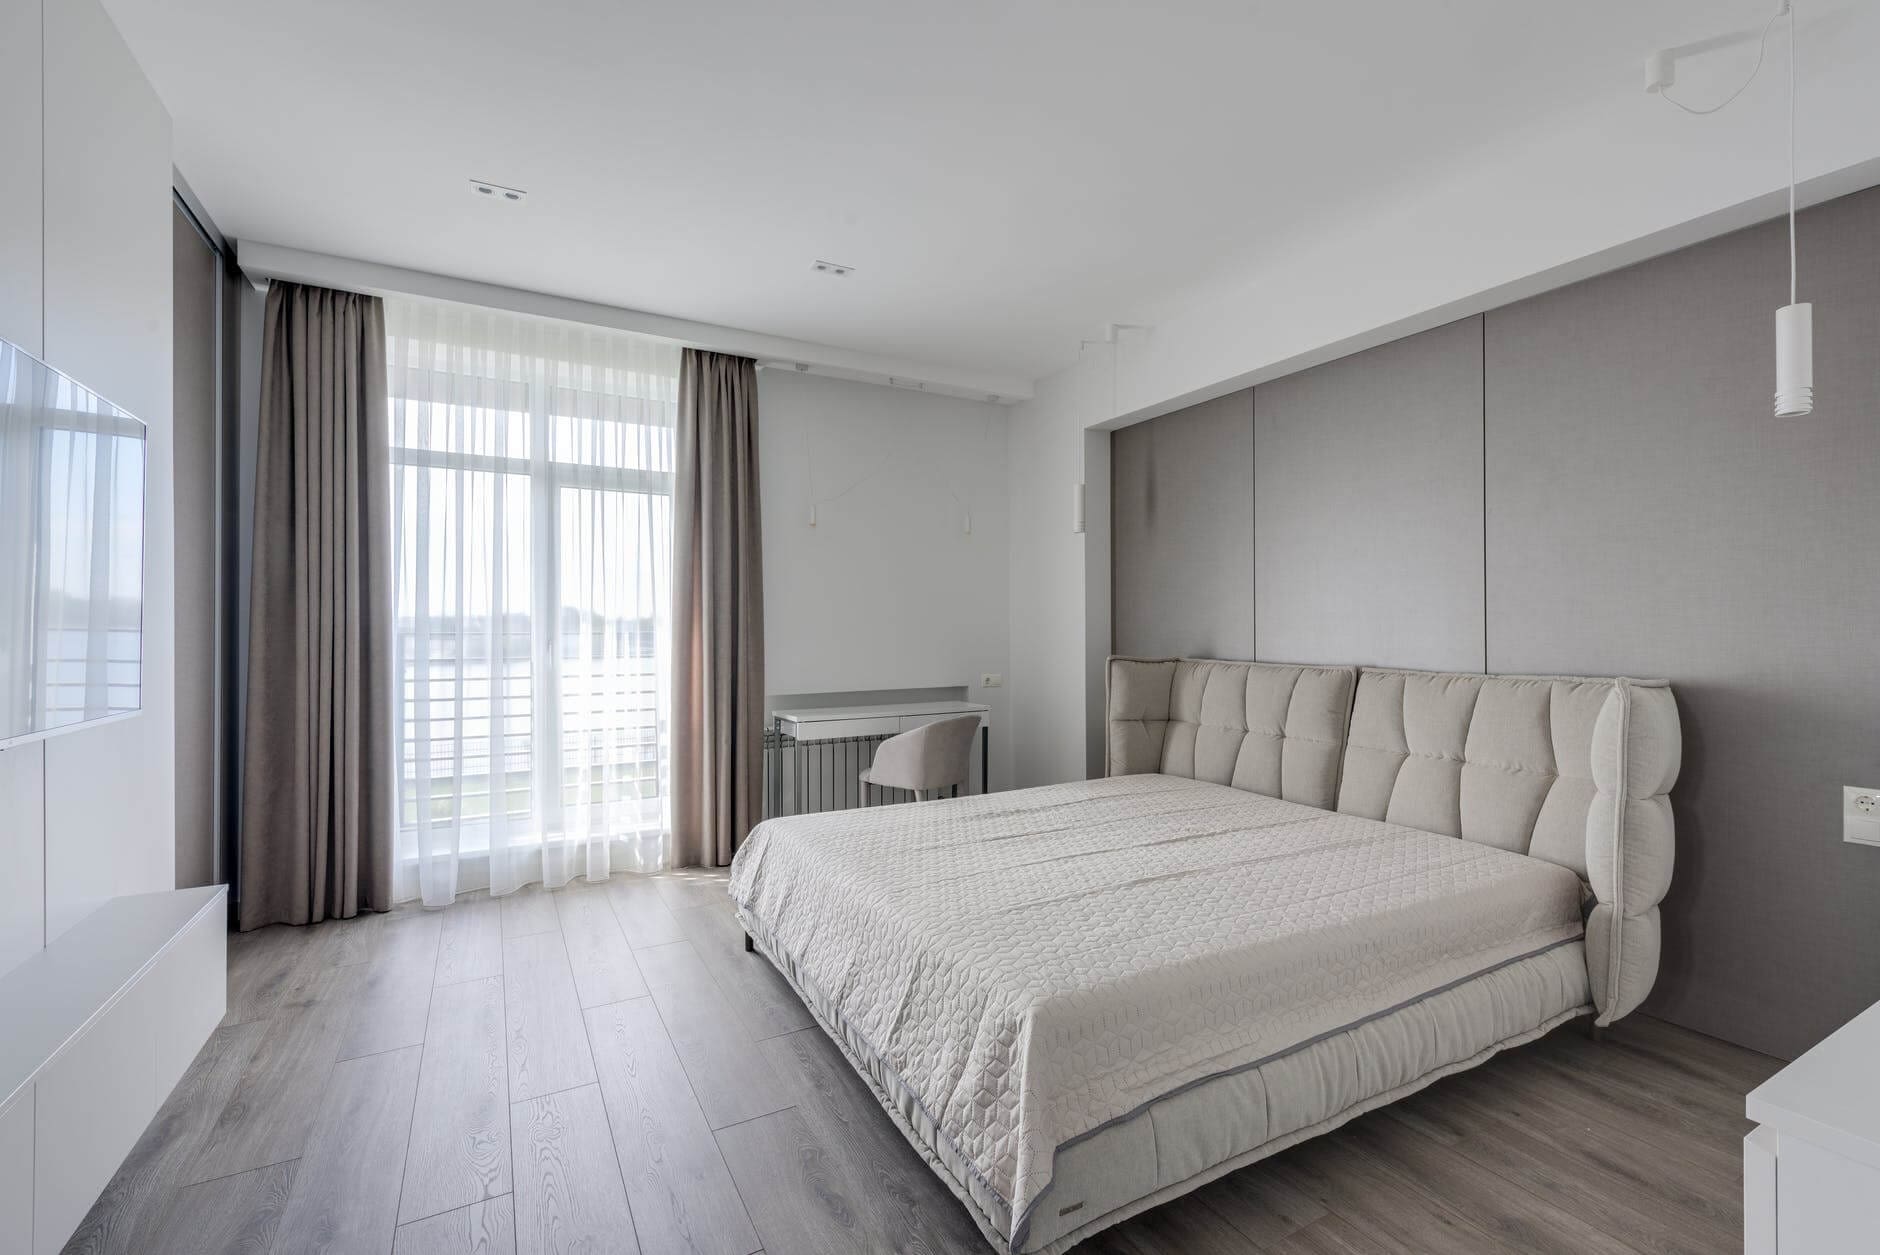 comfortable bedroom with light stylish interior